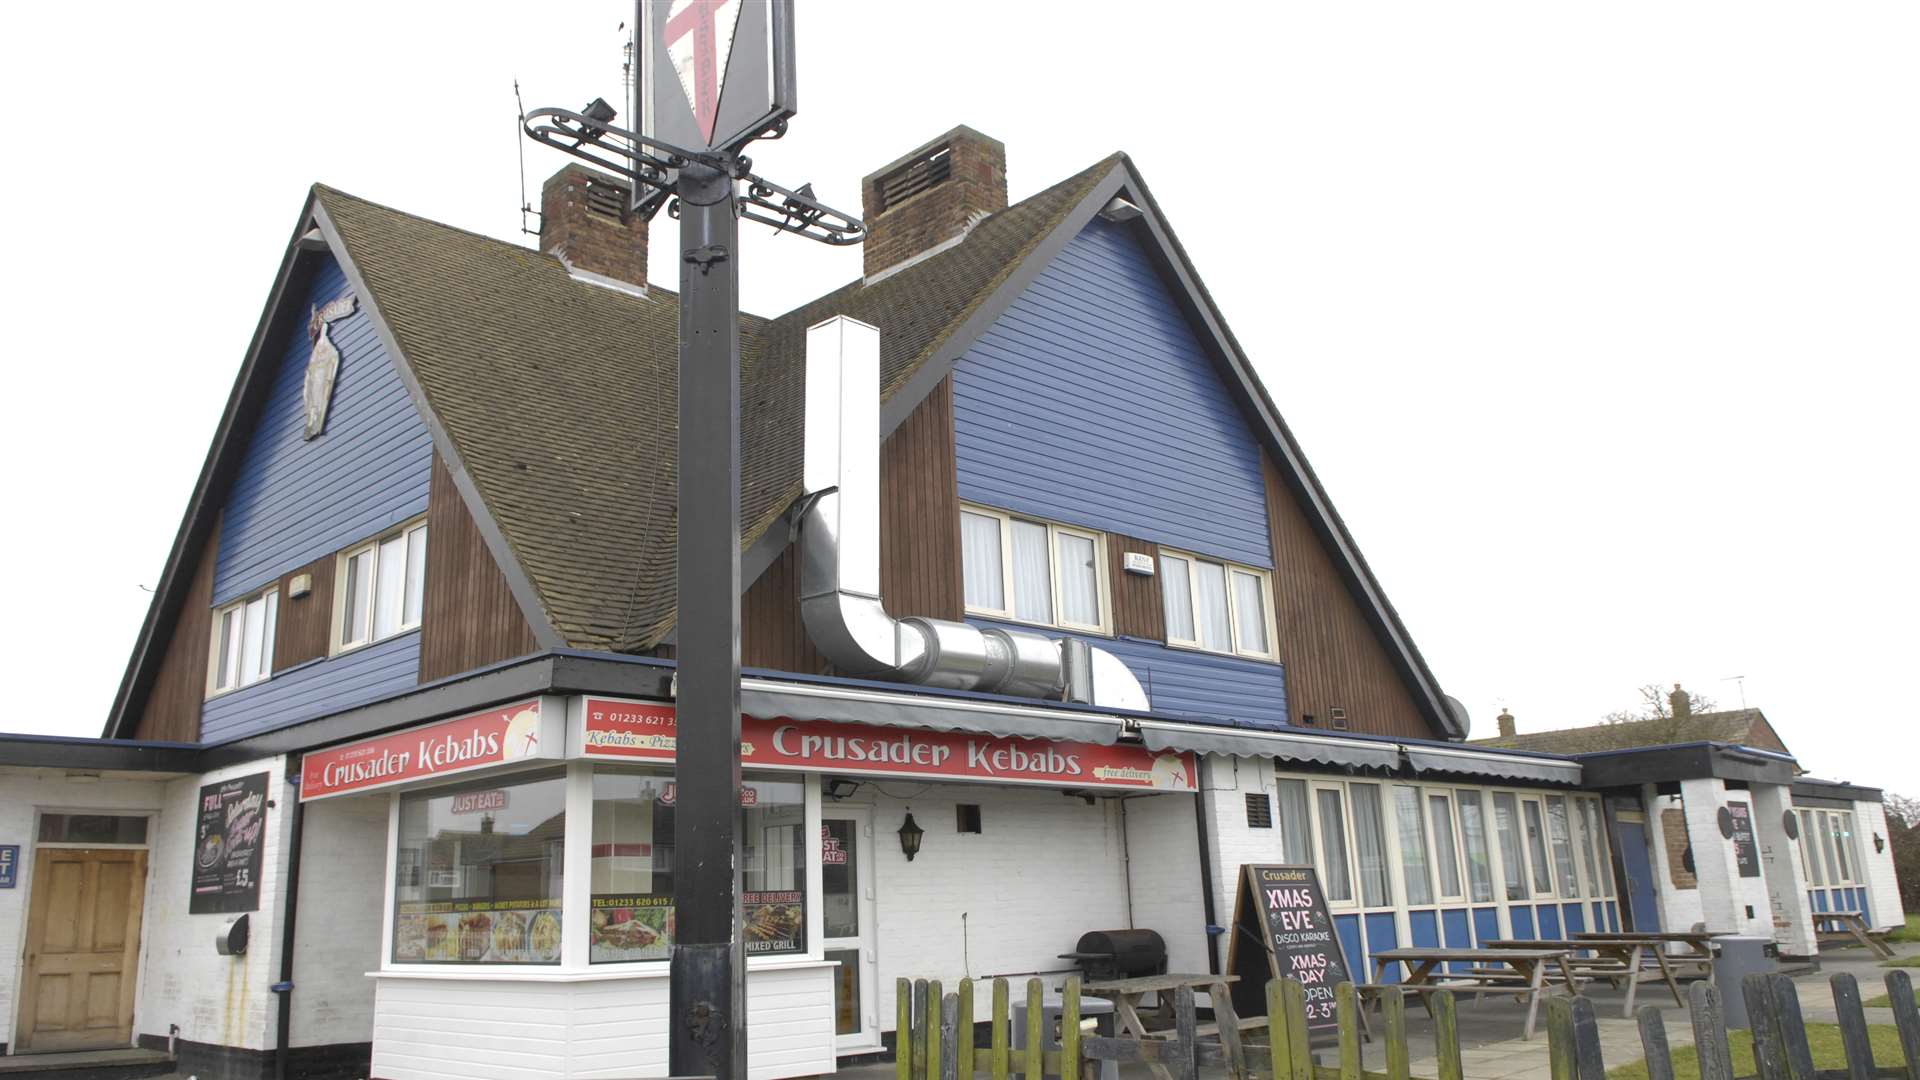 The Crusader pub, with adjoining kebab shop, in Brookfield Road, Ashford.